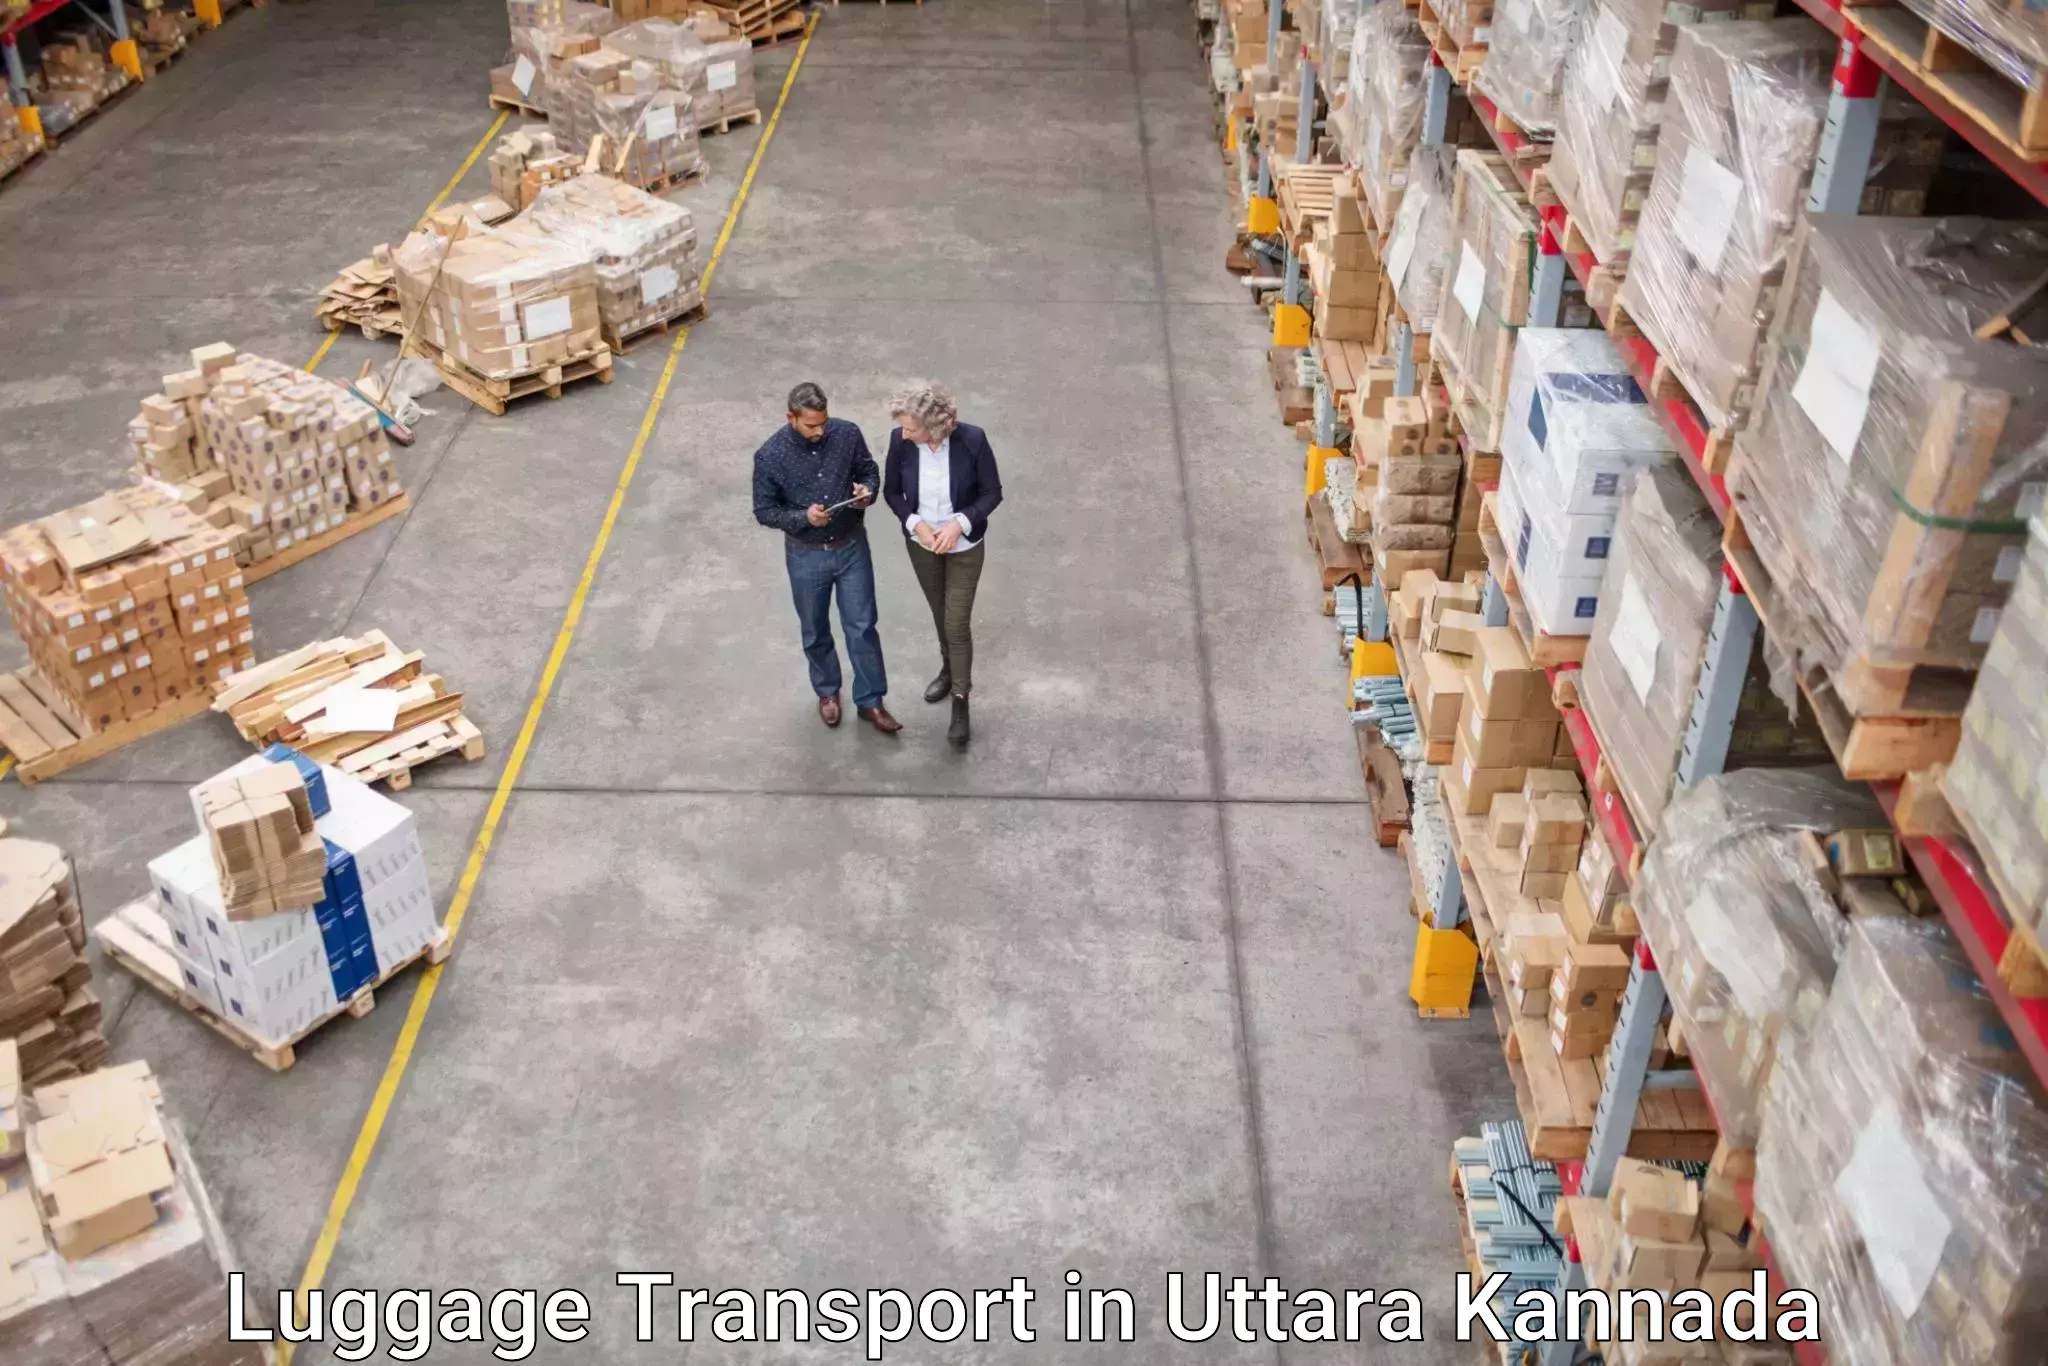 Luggage transport company in Uttara Kannada